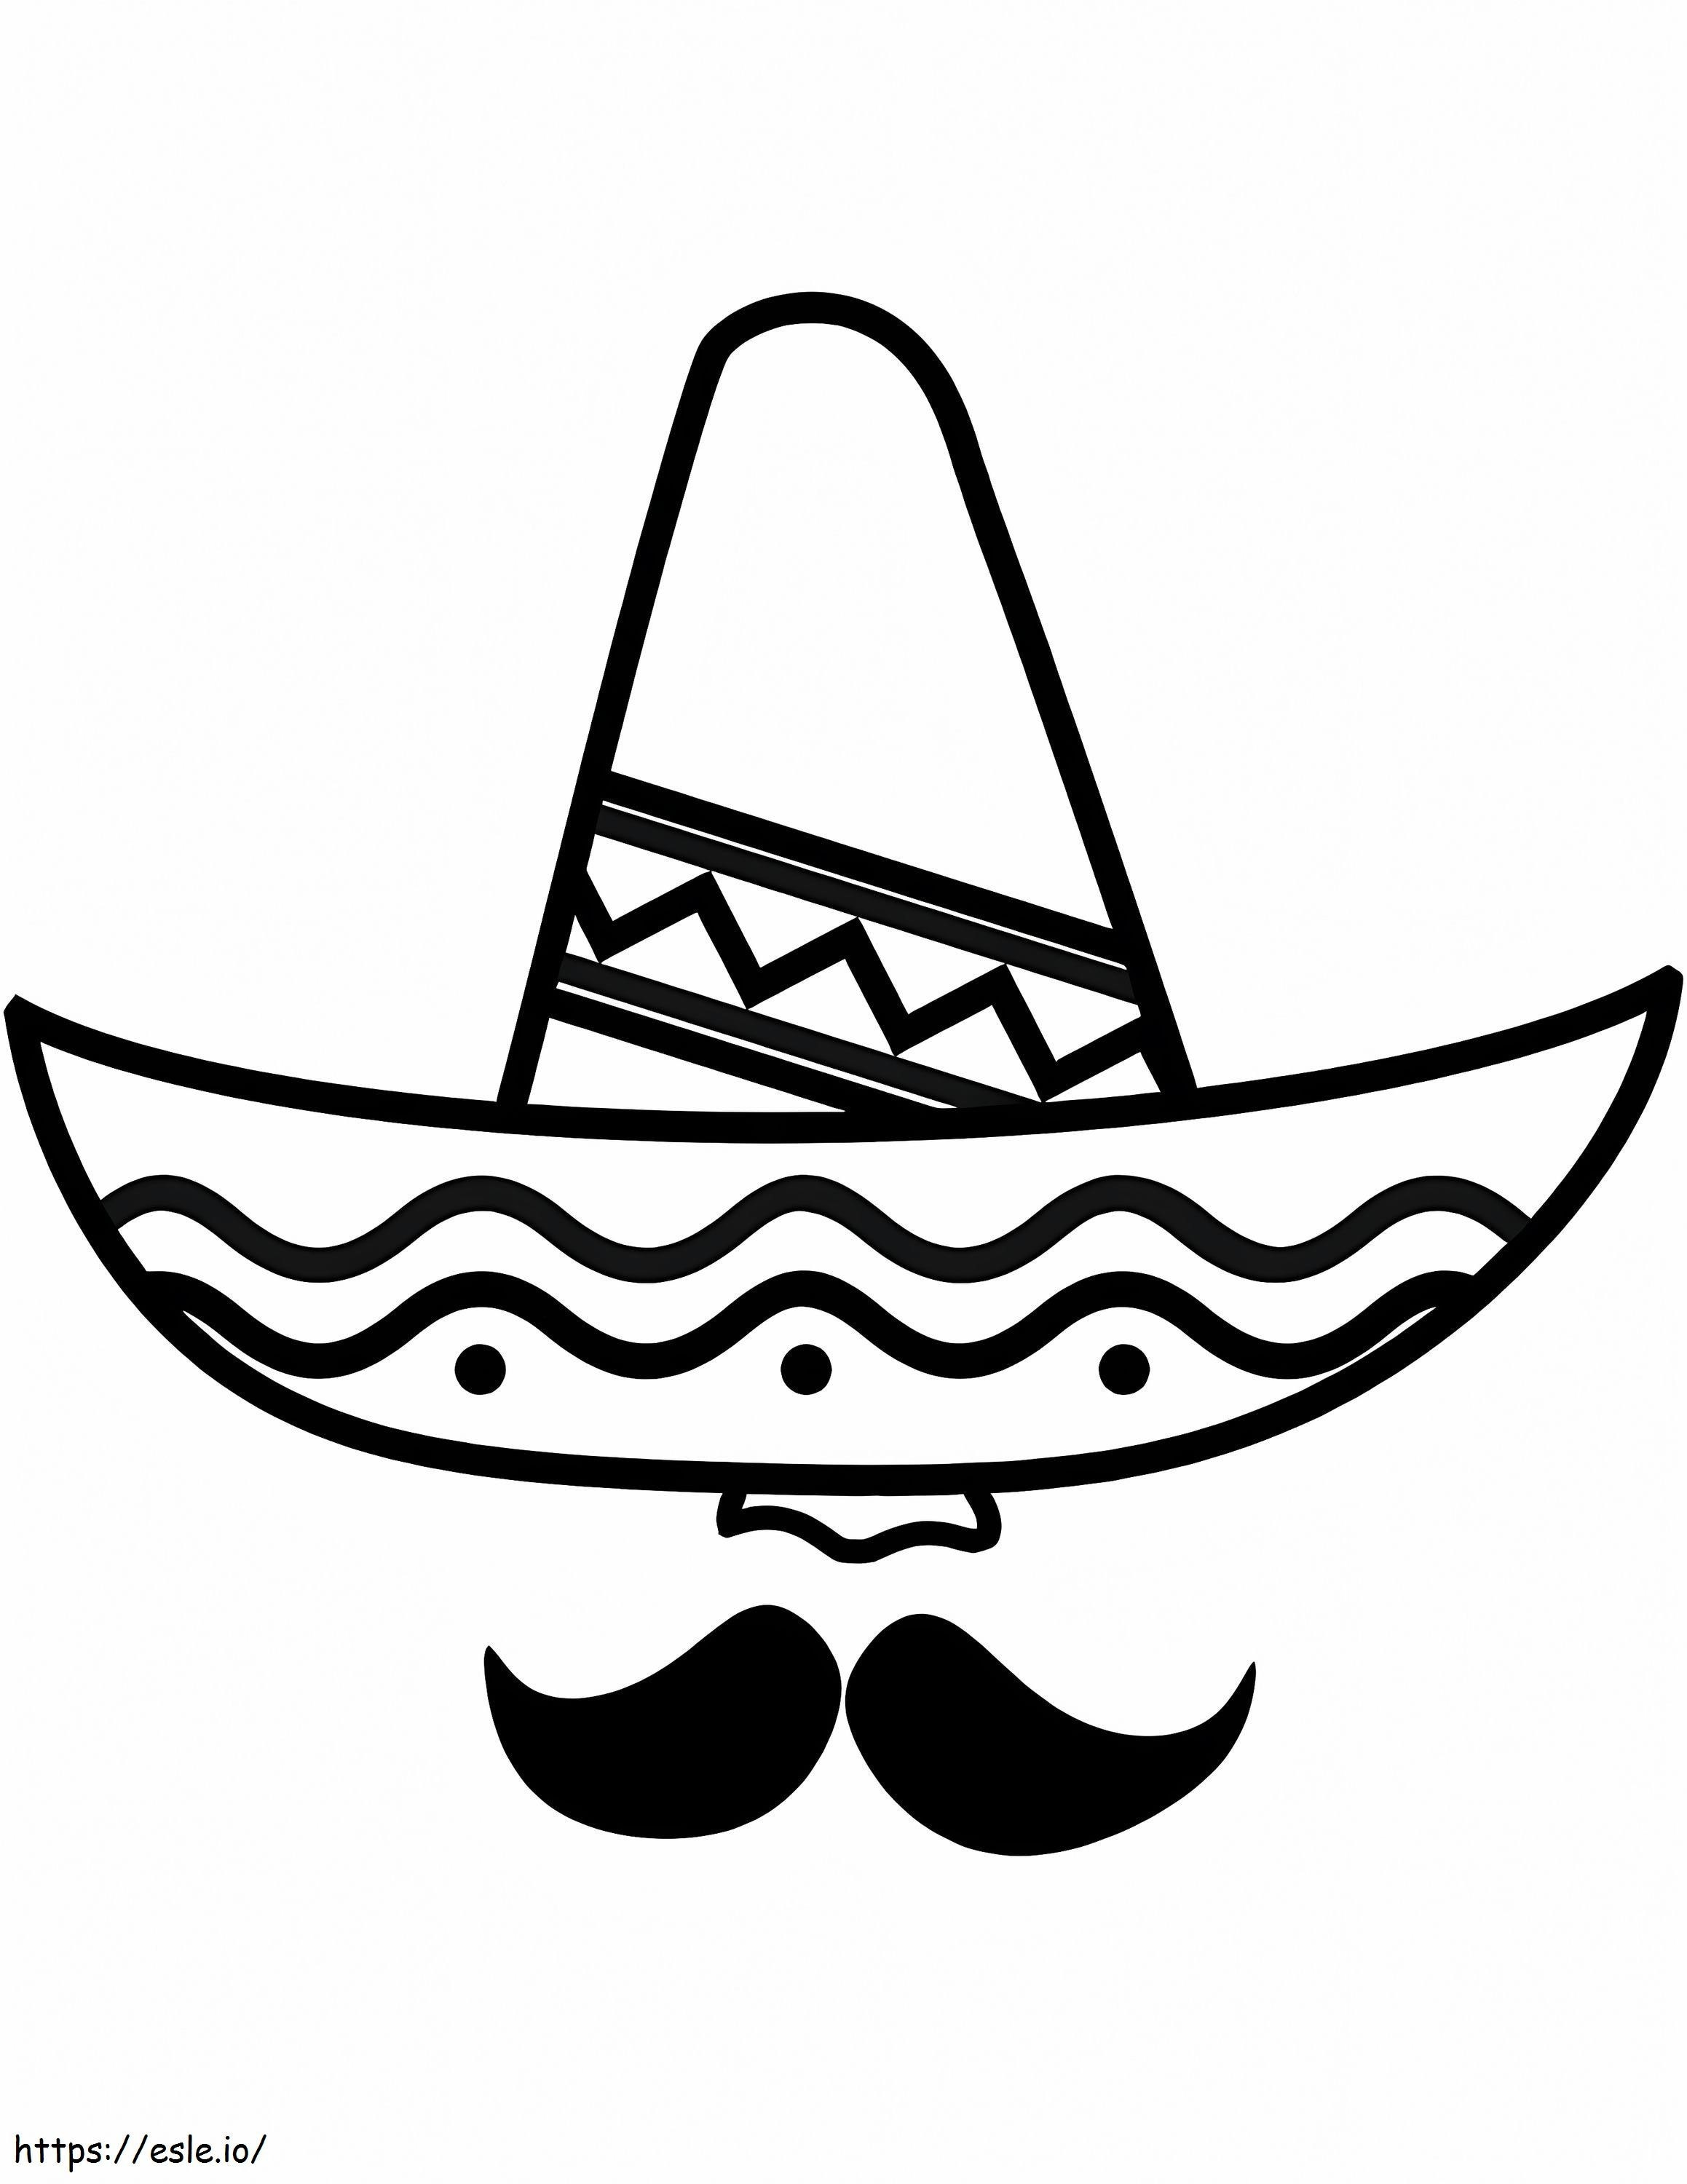 Sombrero și mustață de colorat